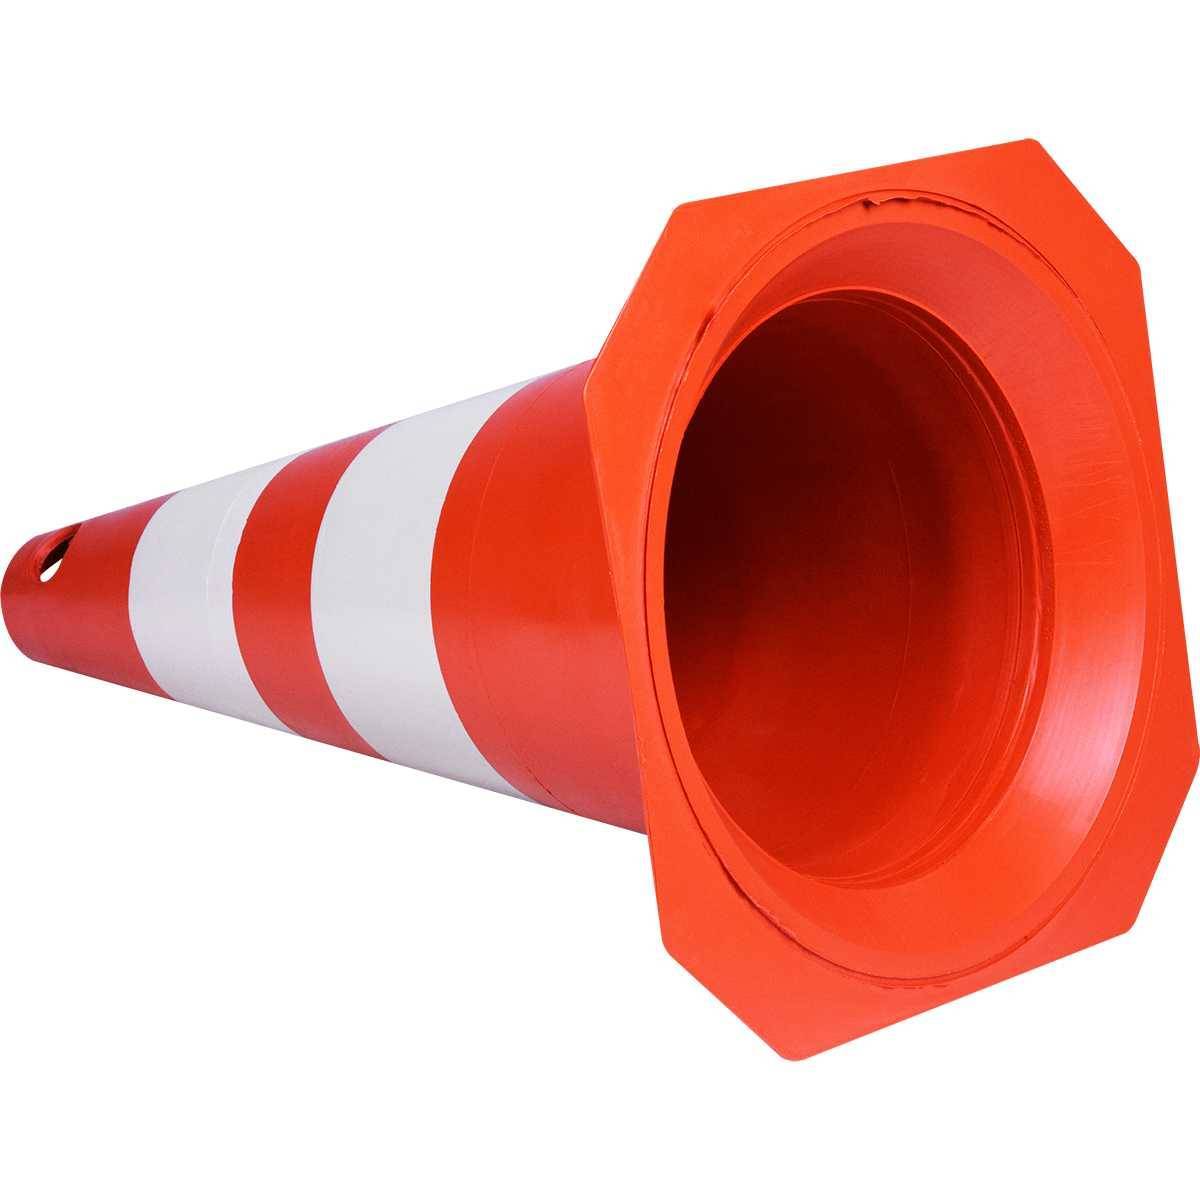 Cone Sinalizção PVC 50cm Laranja - WORKER